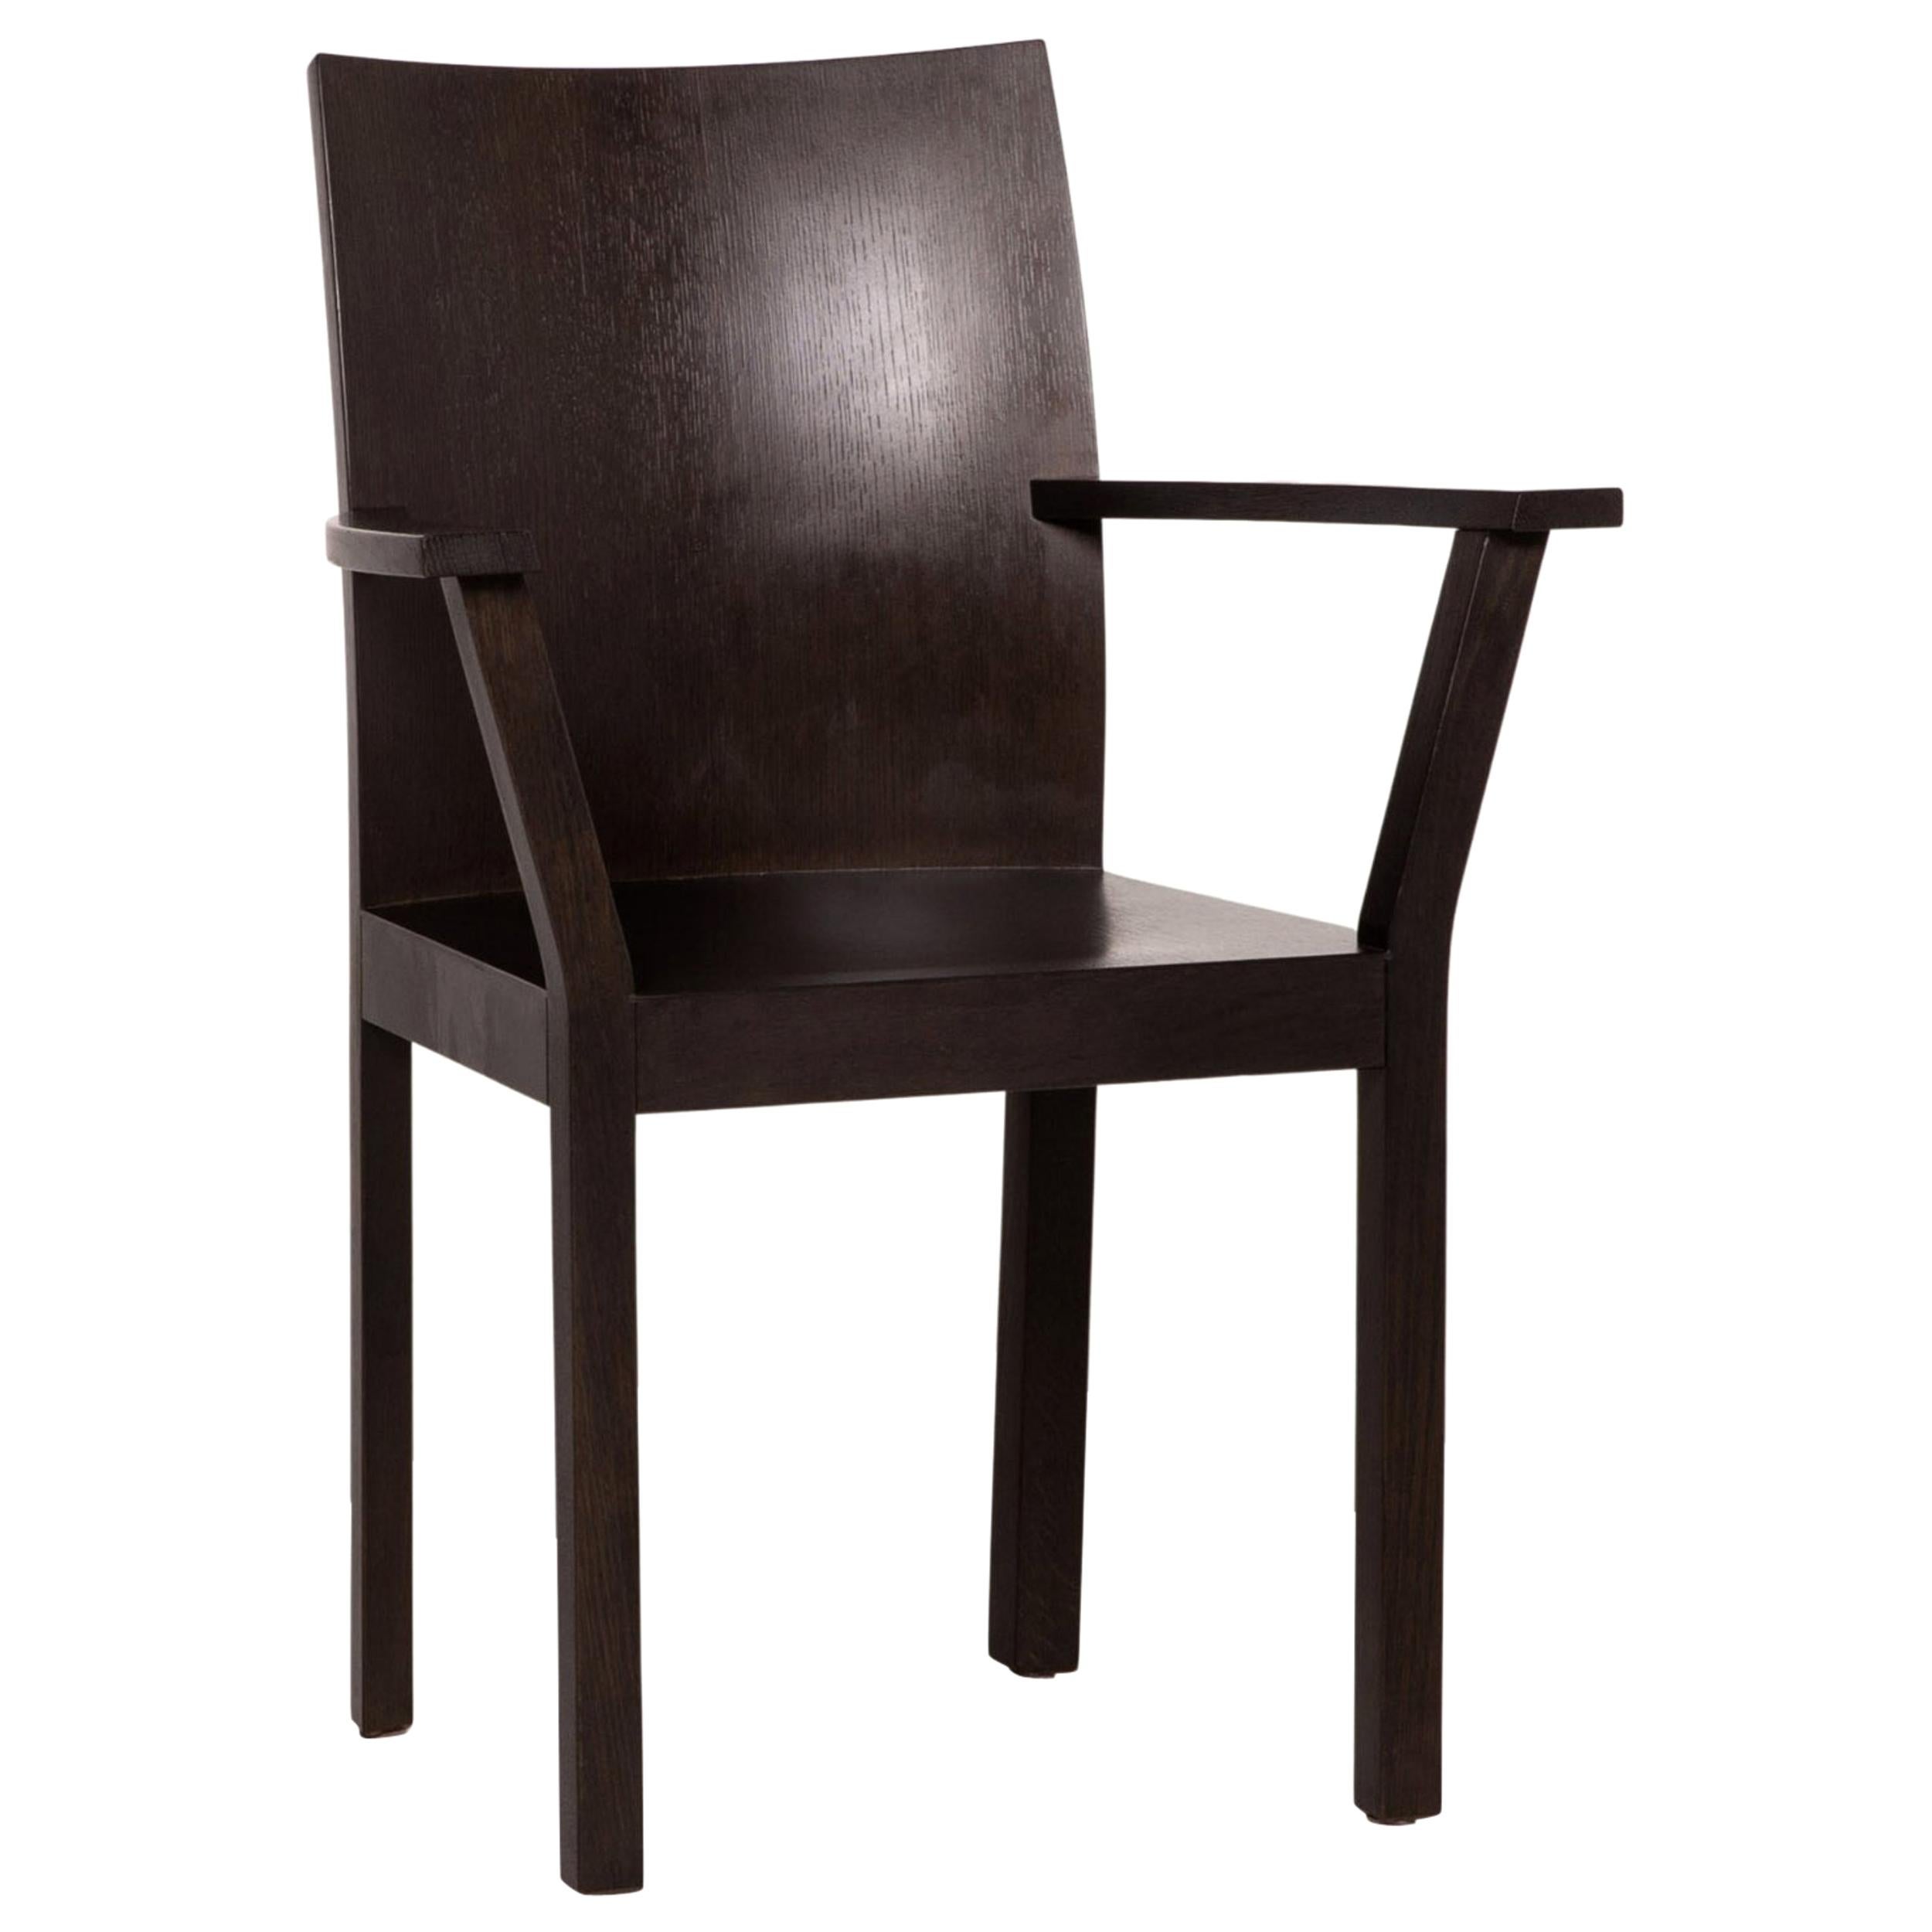 Bulthaup Nemus Wood Chair Dark Brown Brown For Sale